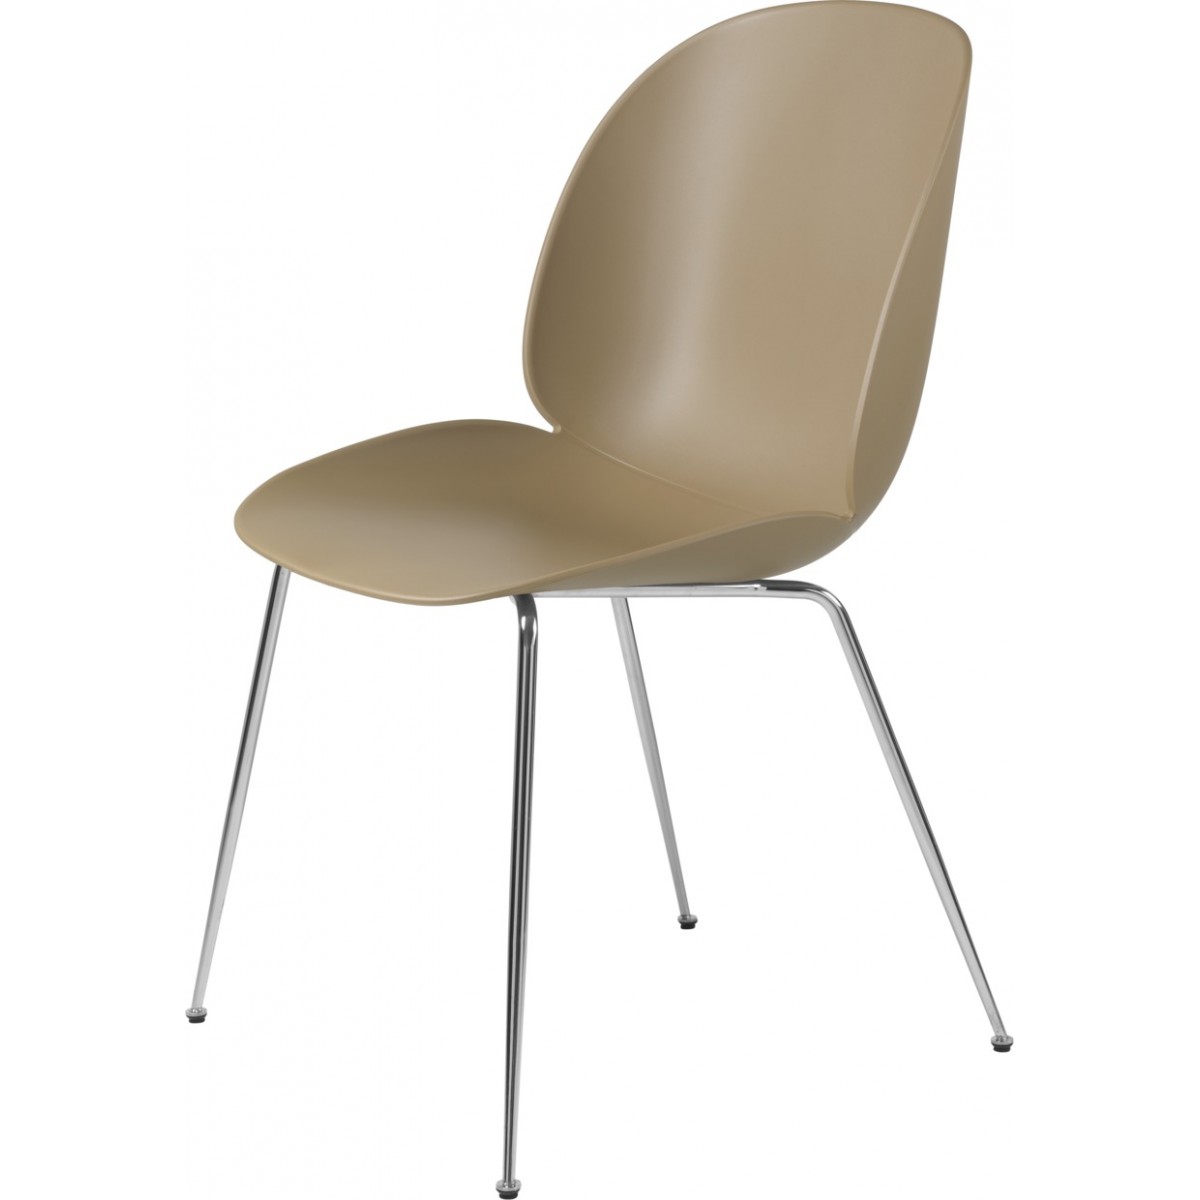 pebble brown shell - chrome base - Beetle chair plastic